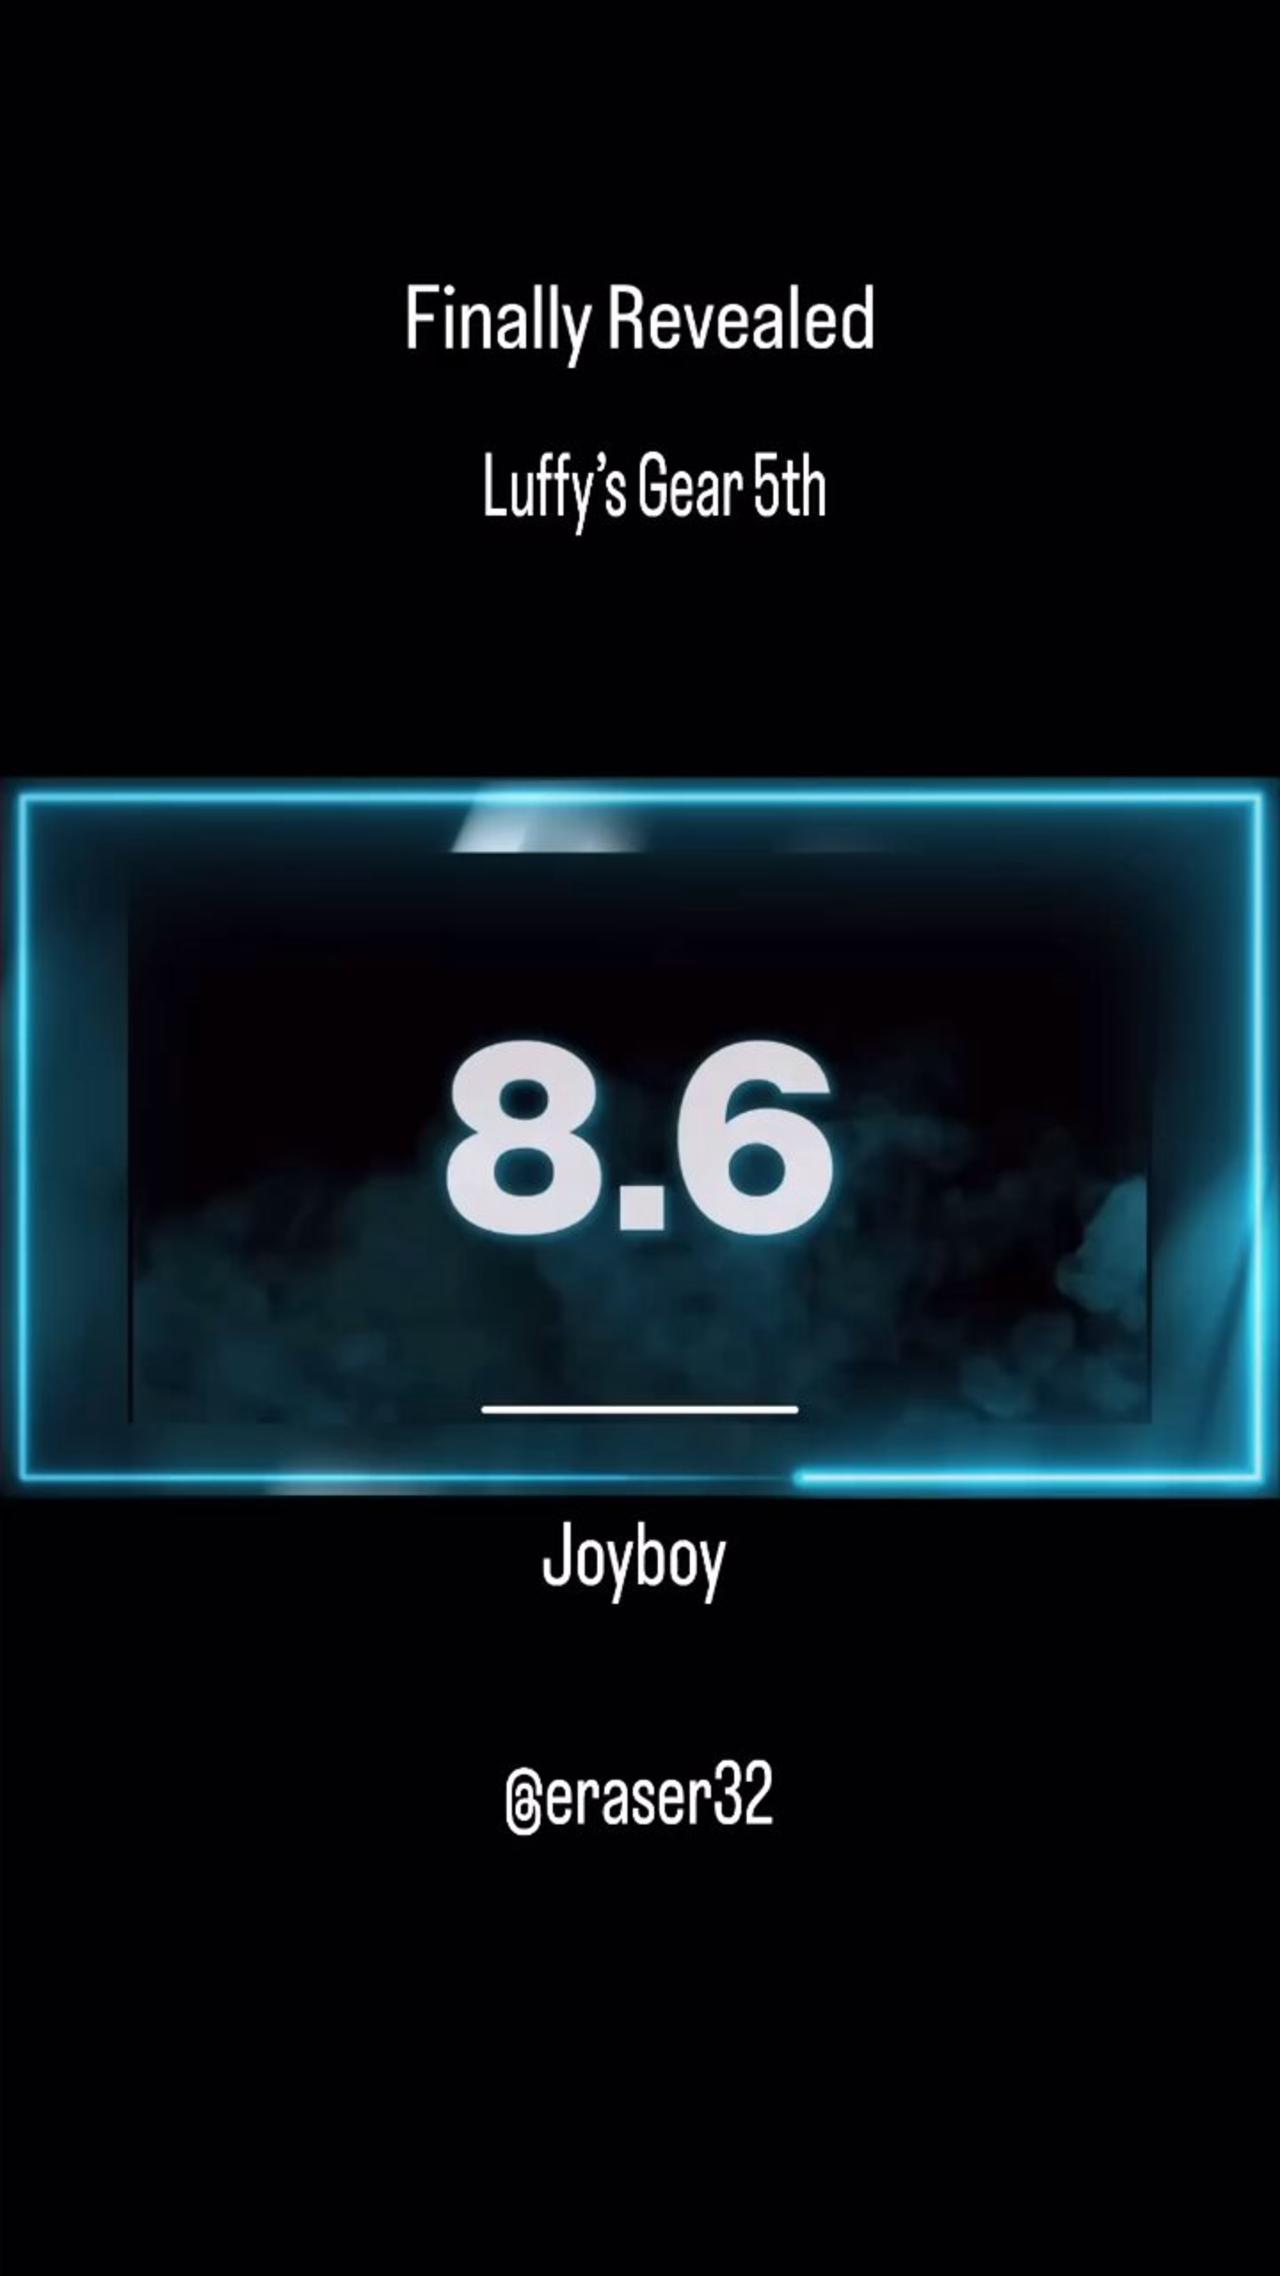 Joyboy gear5